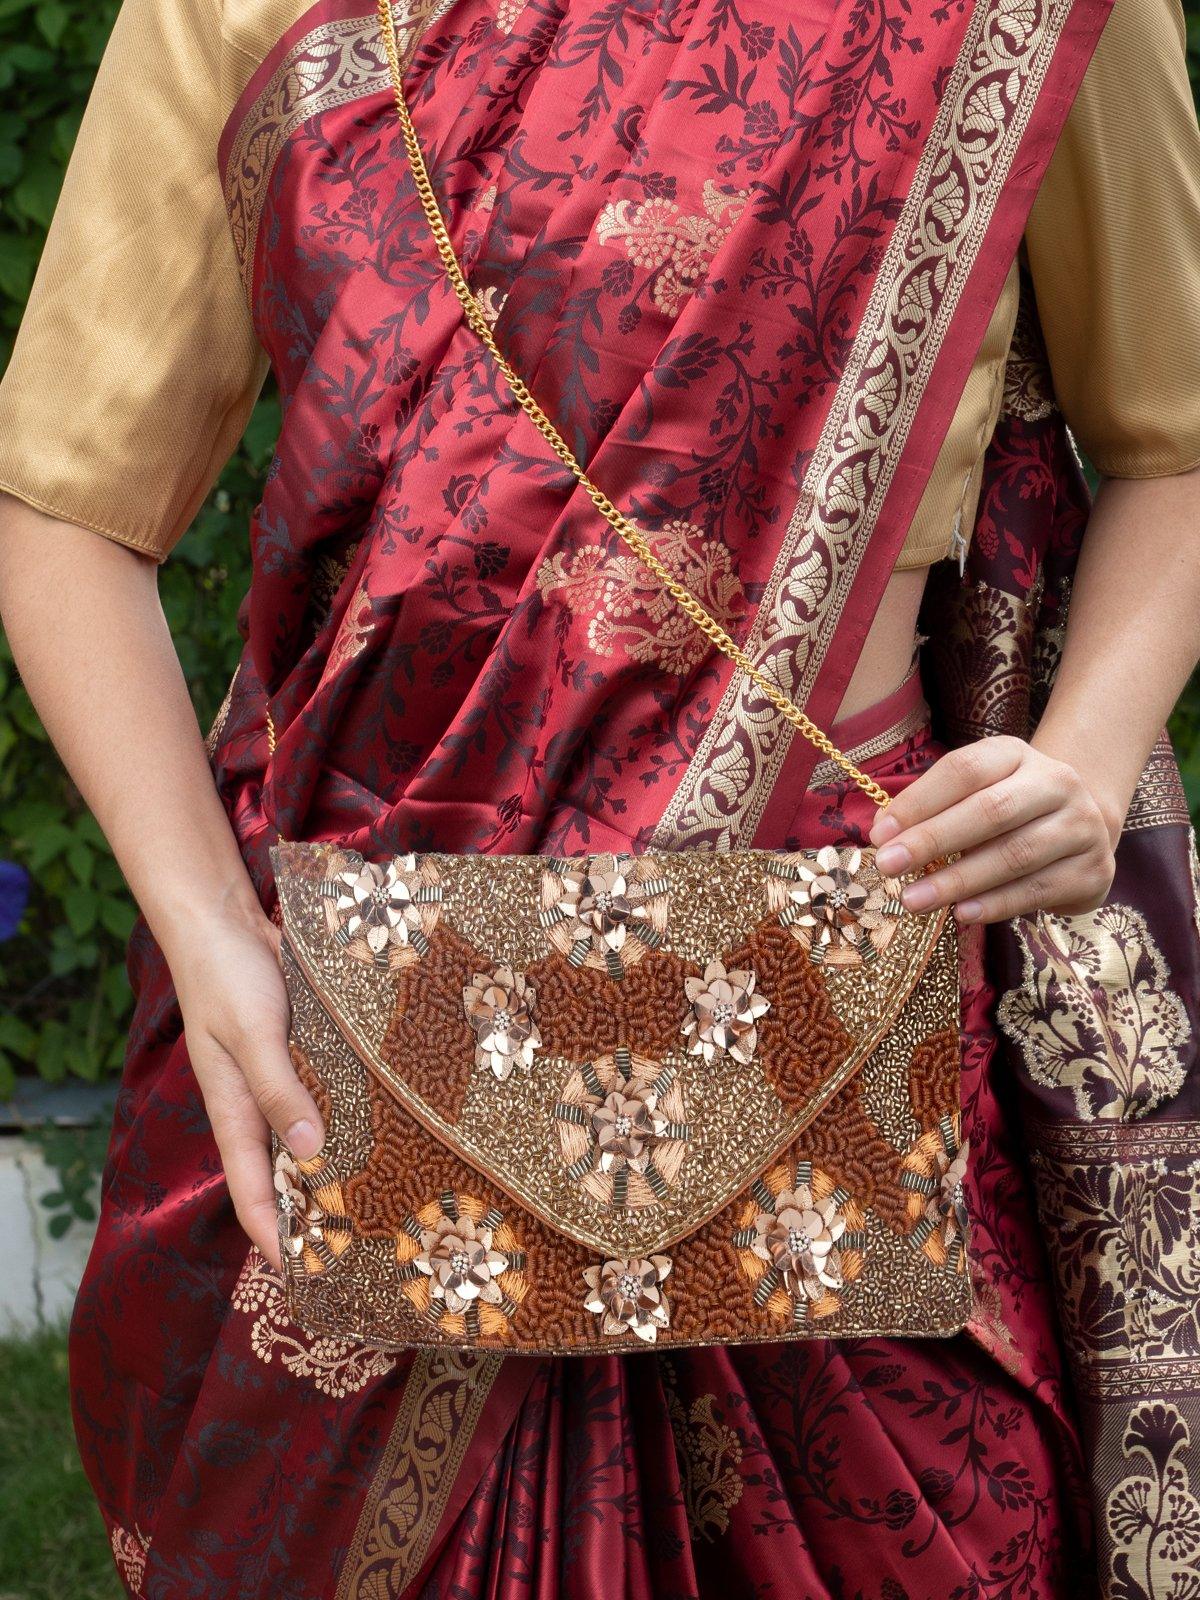 Vinod Handicrafts Handmade Designer Embroidered Rajasthani Clutch/Sling Bag  For Women at Rs 120 | latest design bag latest cream jaipuri designer cl in  New Delhi | ID: 20892978155